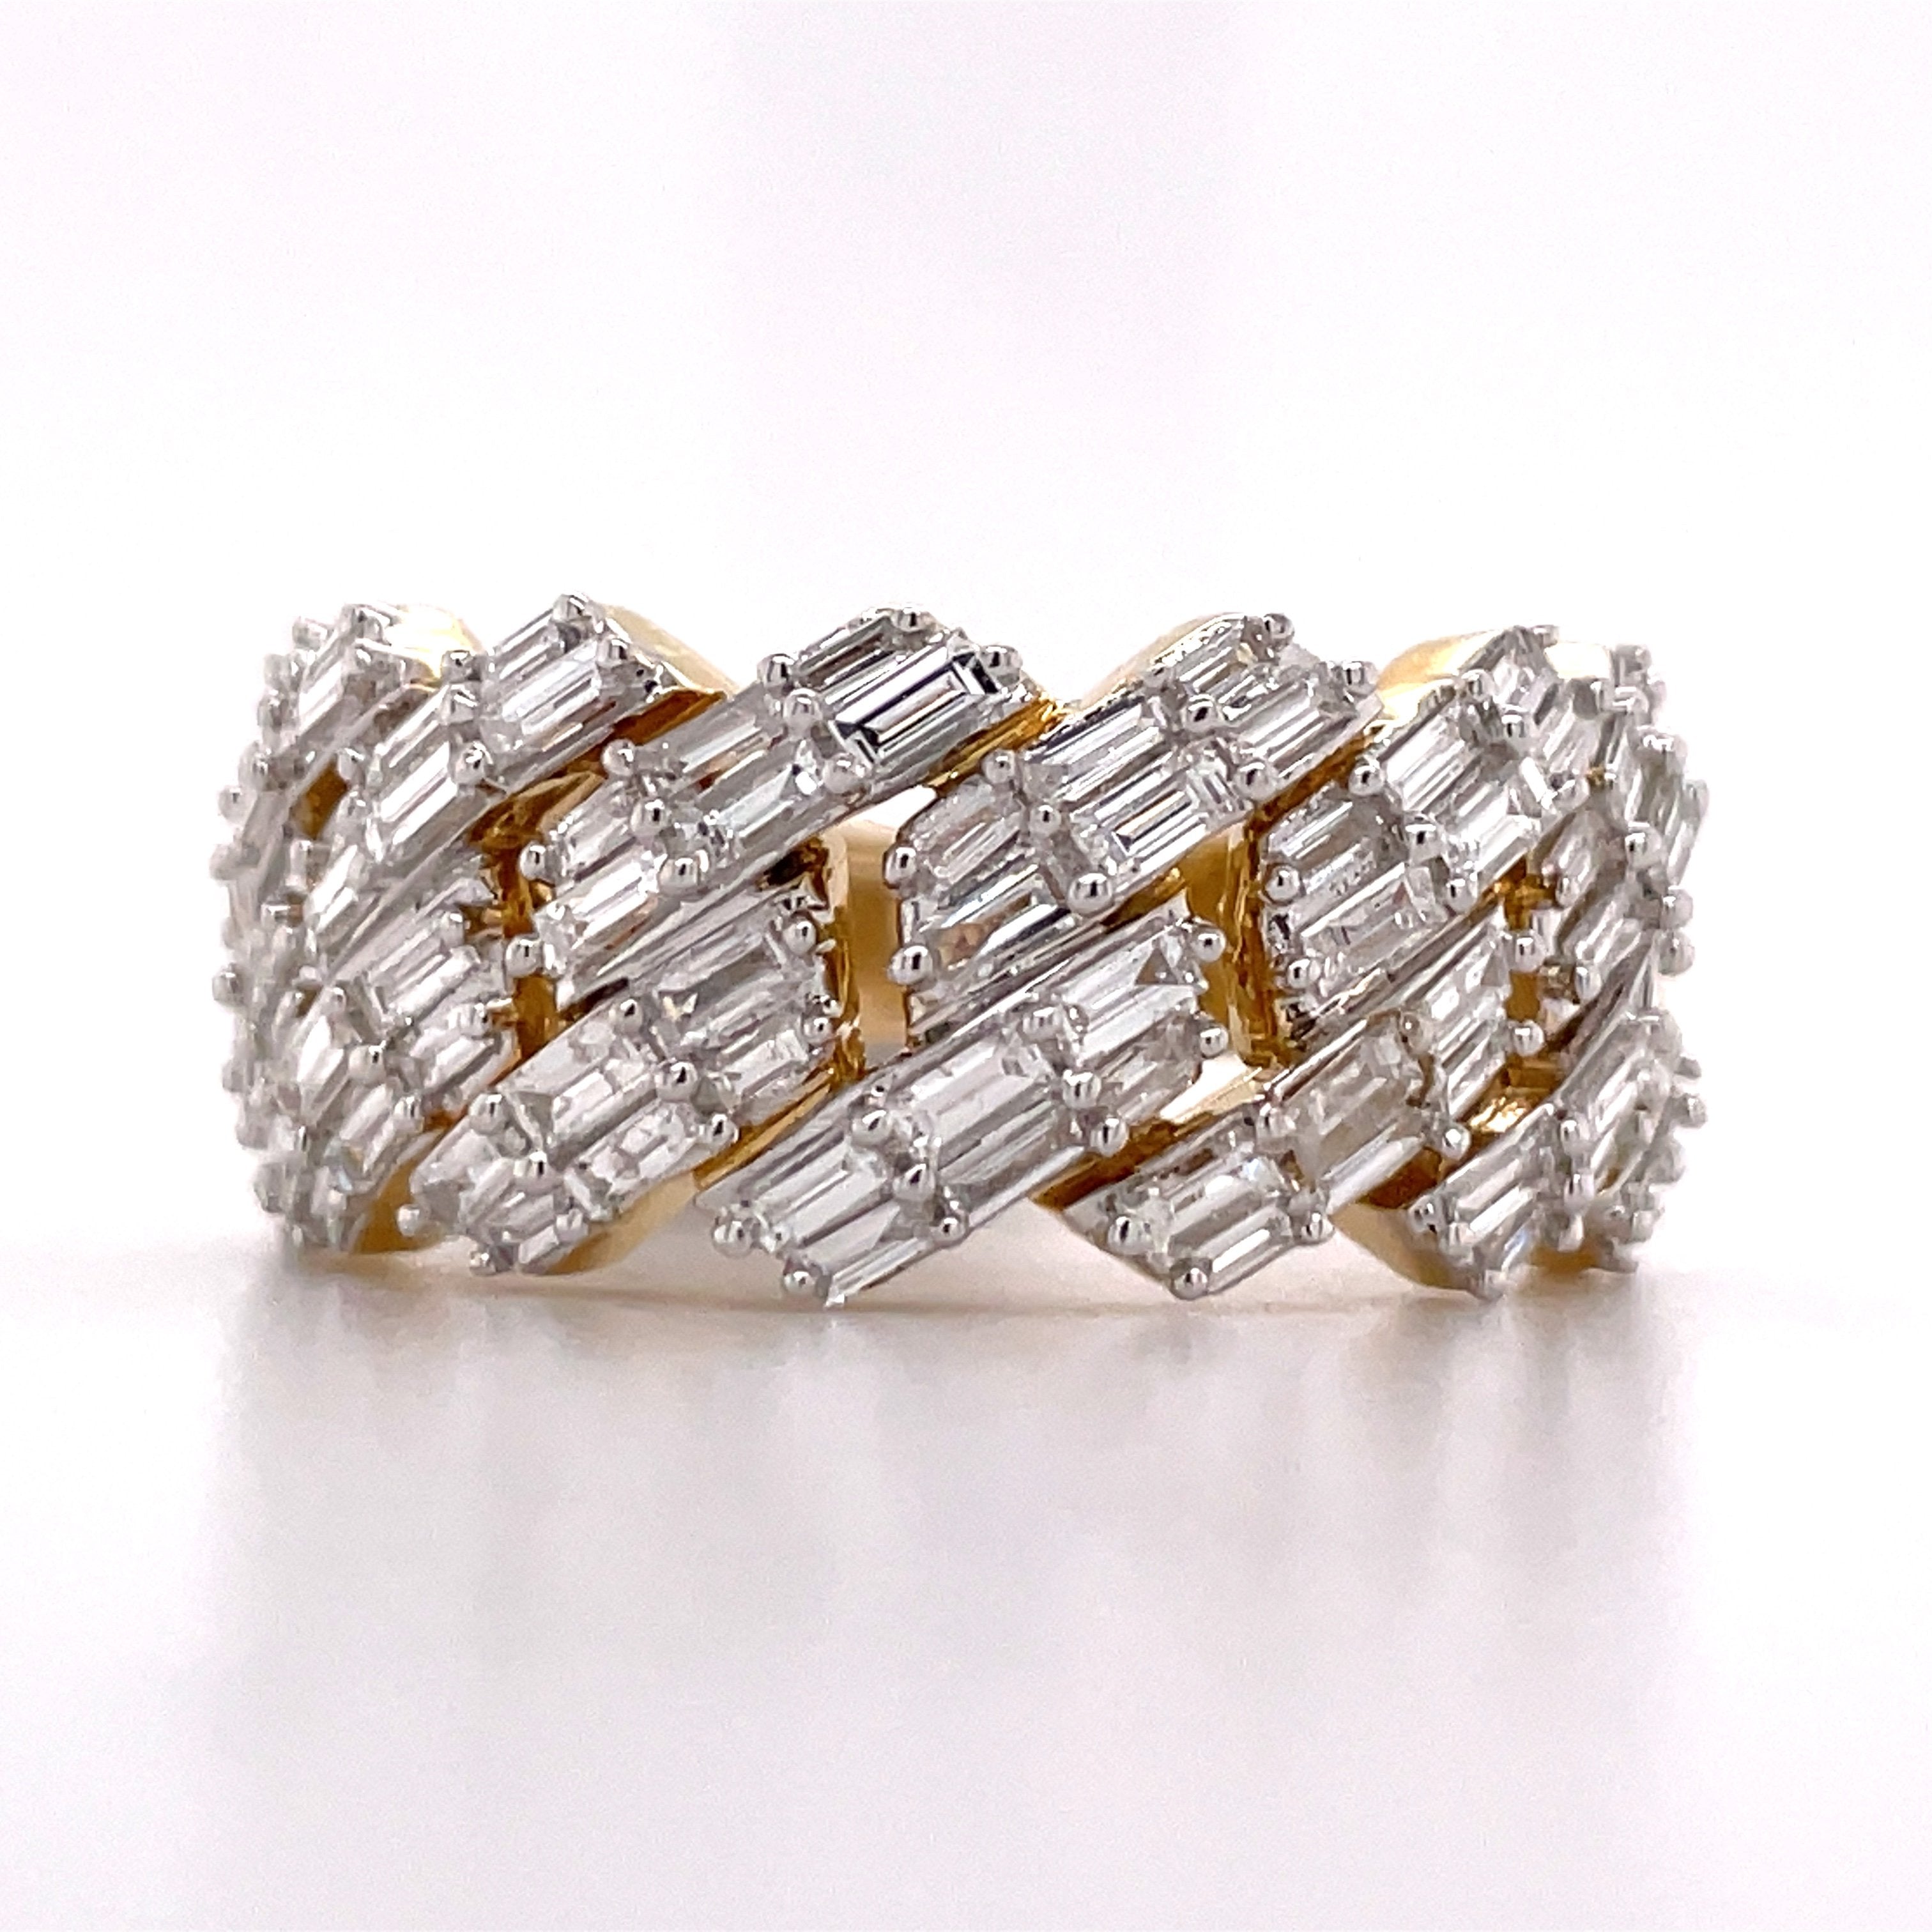 1.46 CT. Diamond Ring in 10K Gold - White Carat - USA & Canada